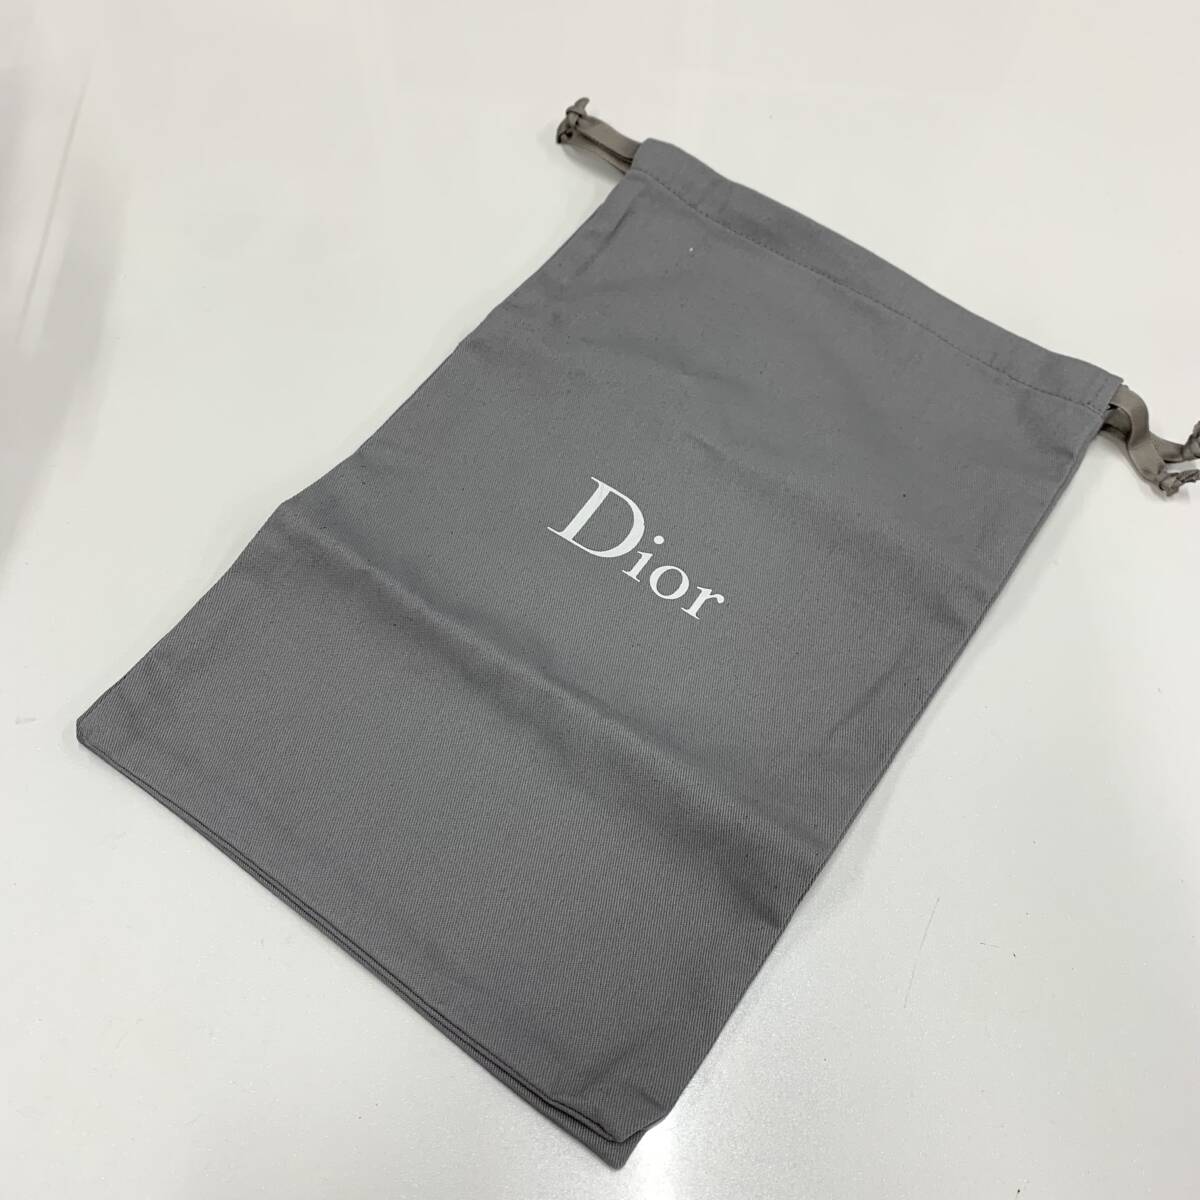 9426 Christian Dior J\'ADIOR mesh dot sling back Flat pumps black 